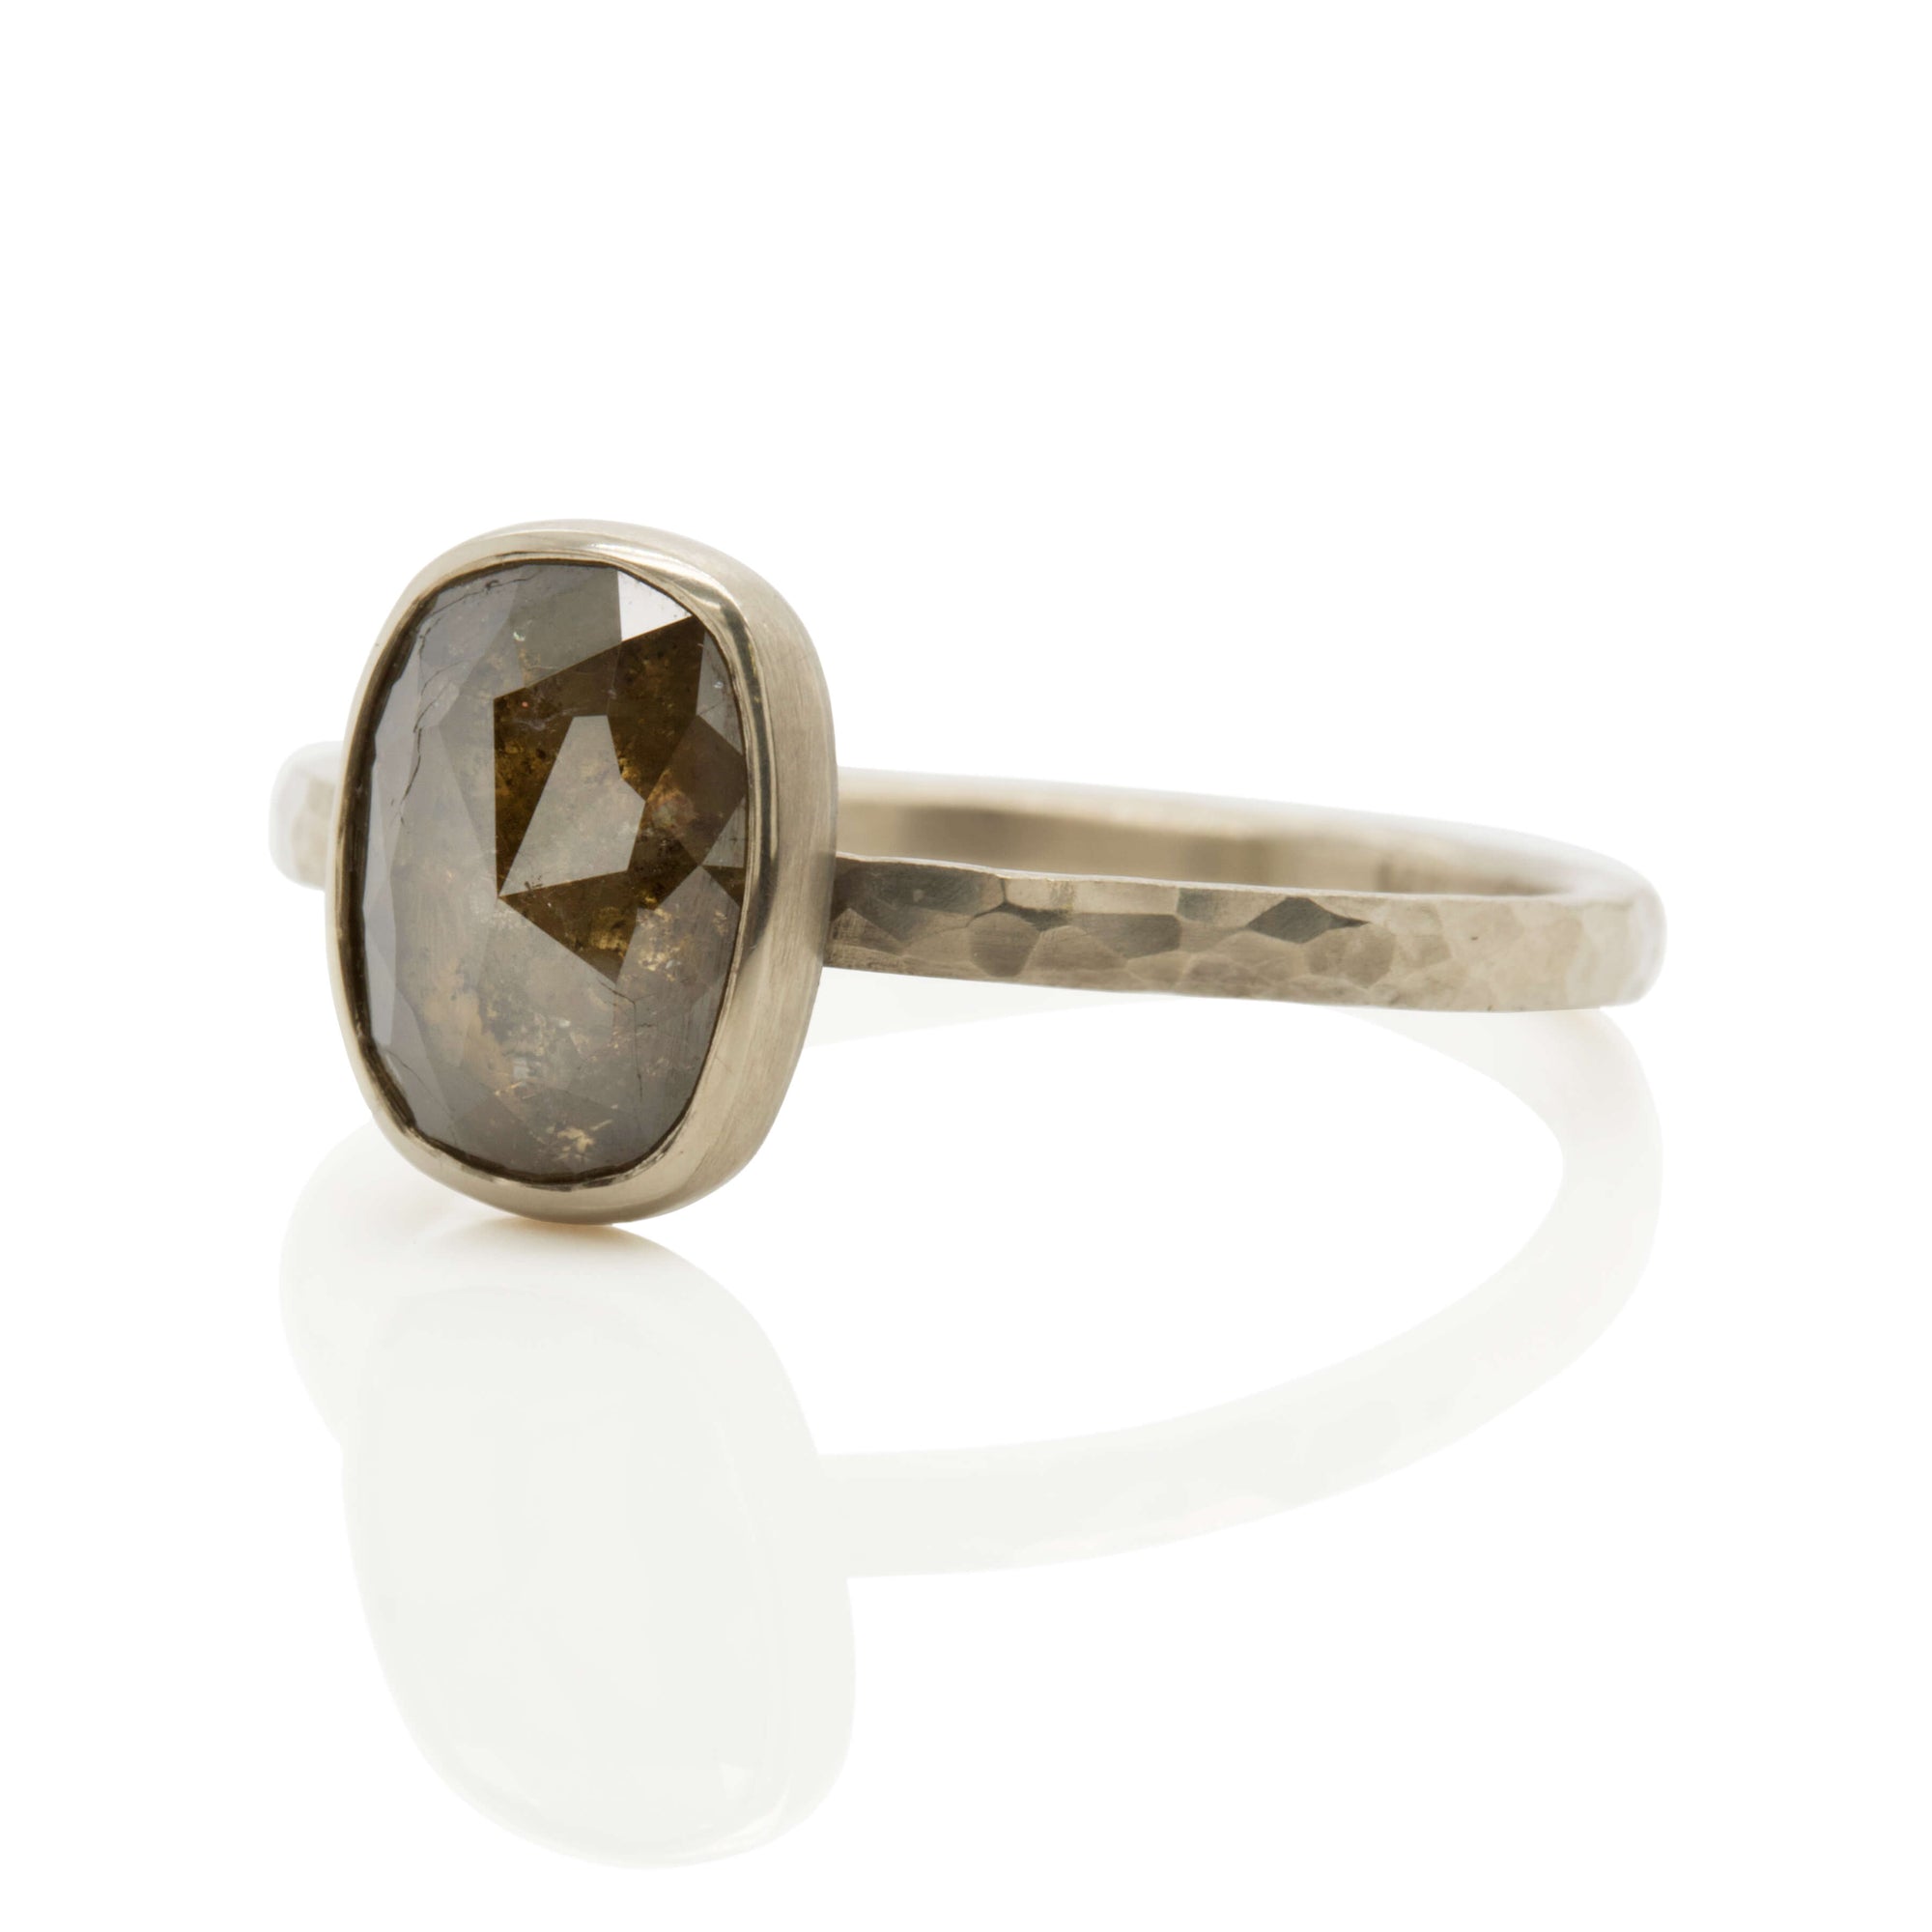 Cushion cut brown diamond engagement ring in palladium white gold. Handmade by EC Design Jewelry in Minneapolis, MN.